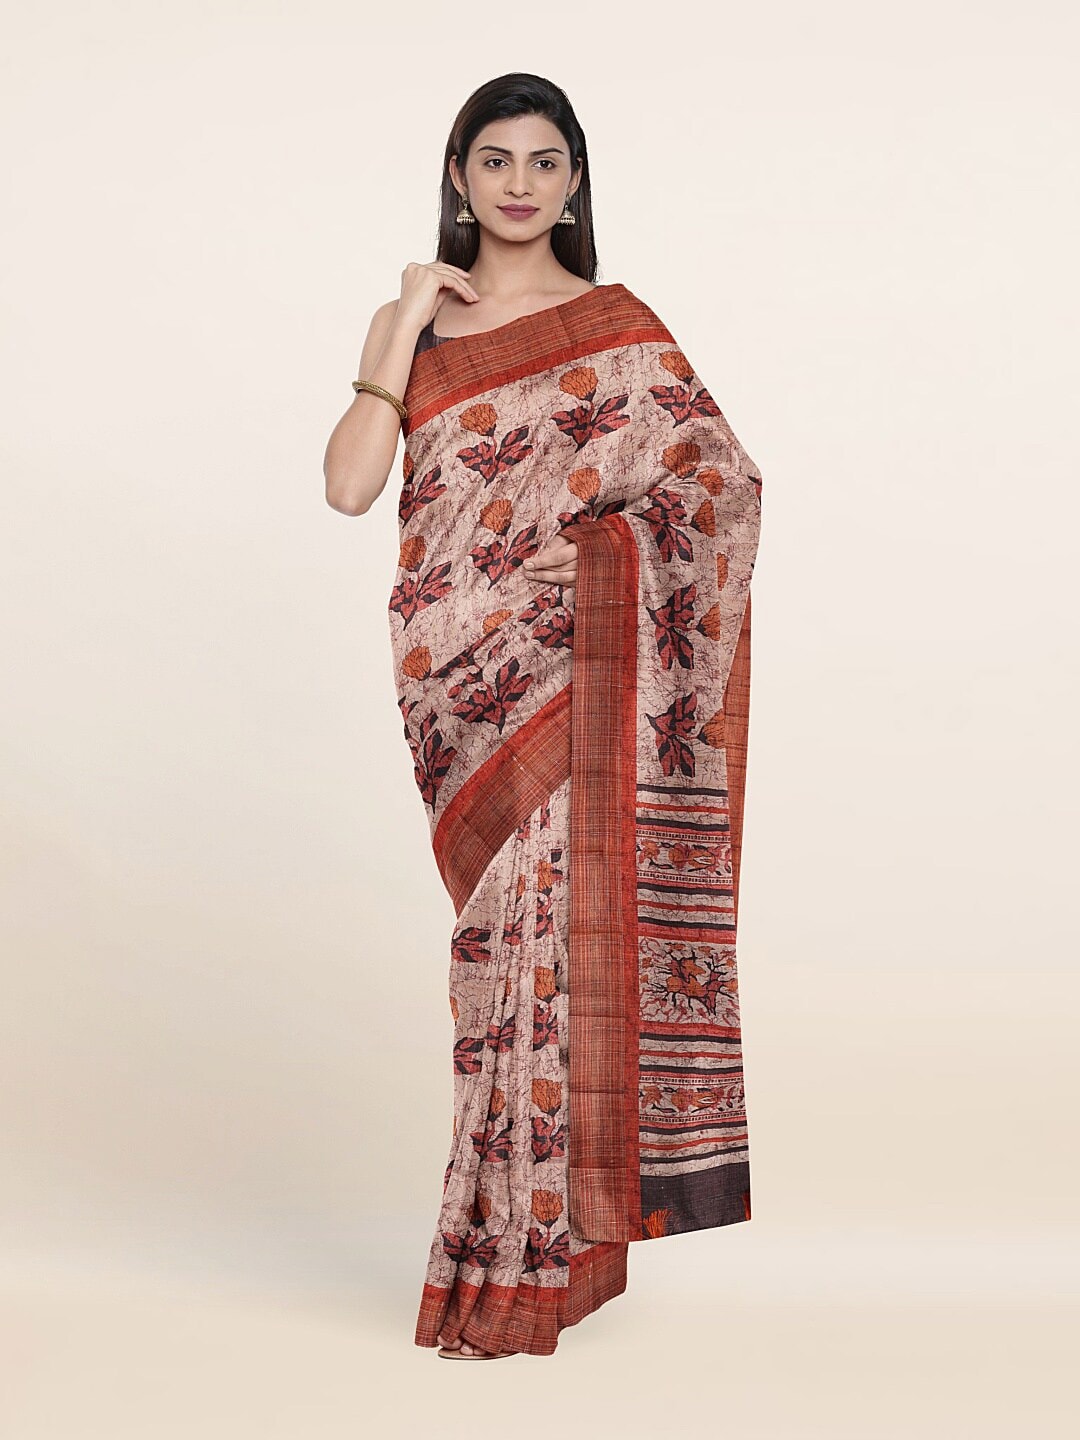 Pothys Cream-Coloured & Brown Floral Zari Art Silk Saree Price in India